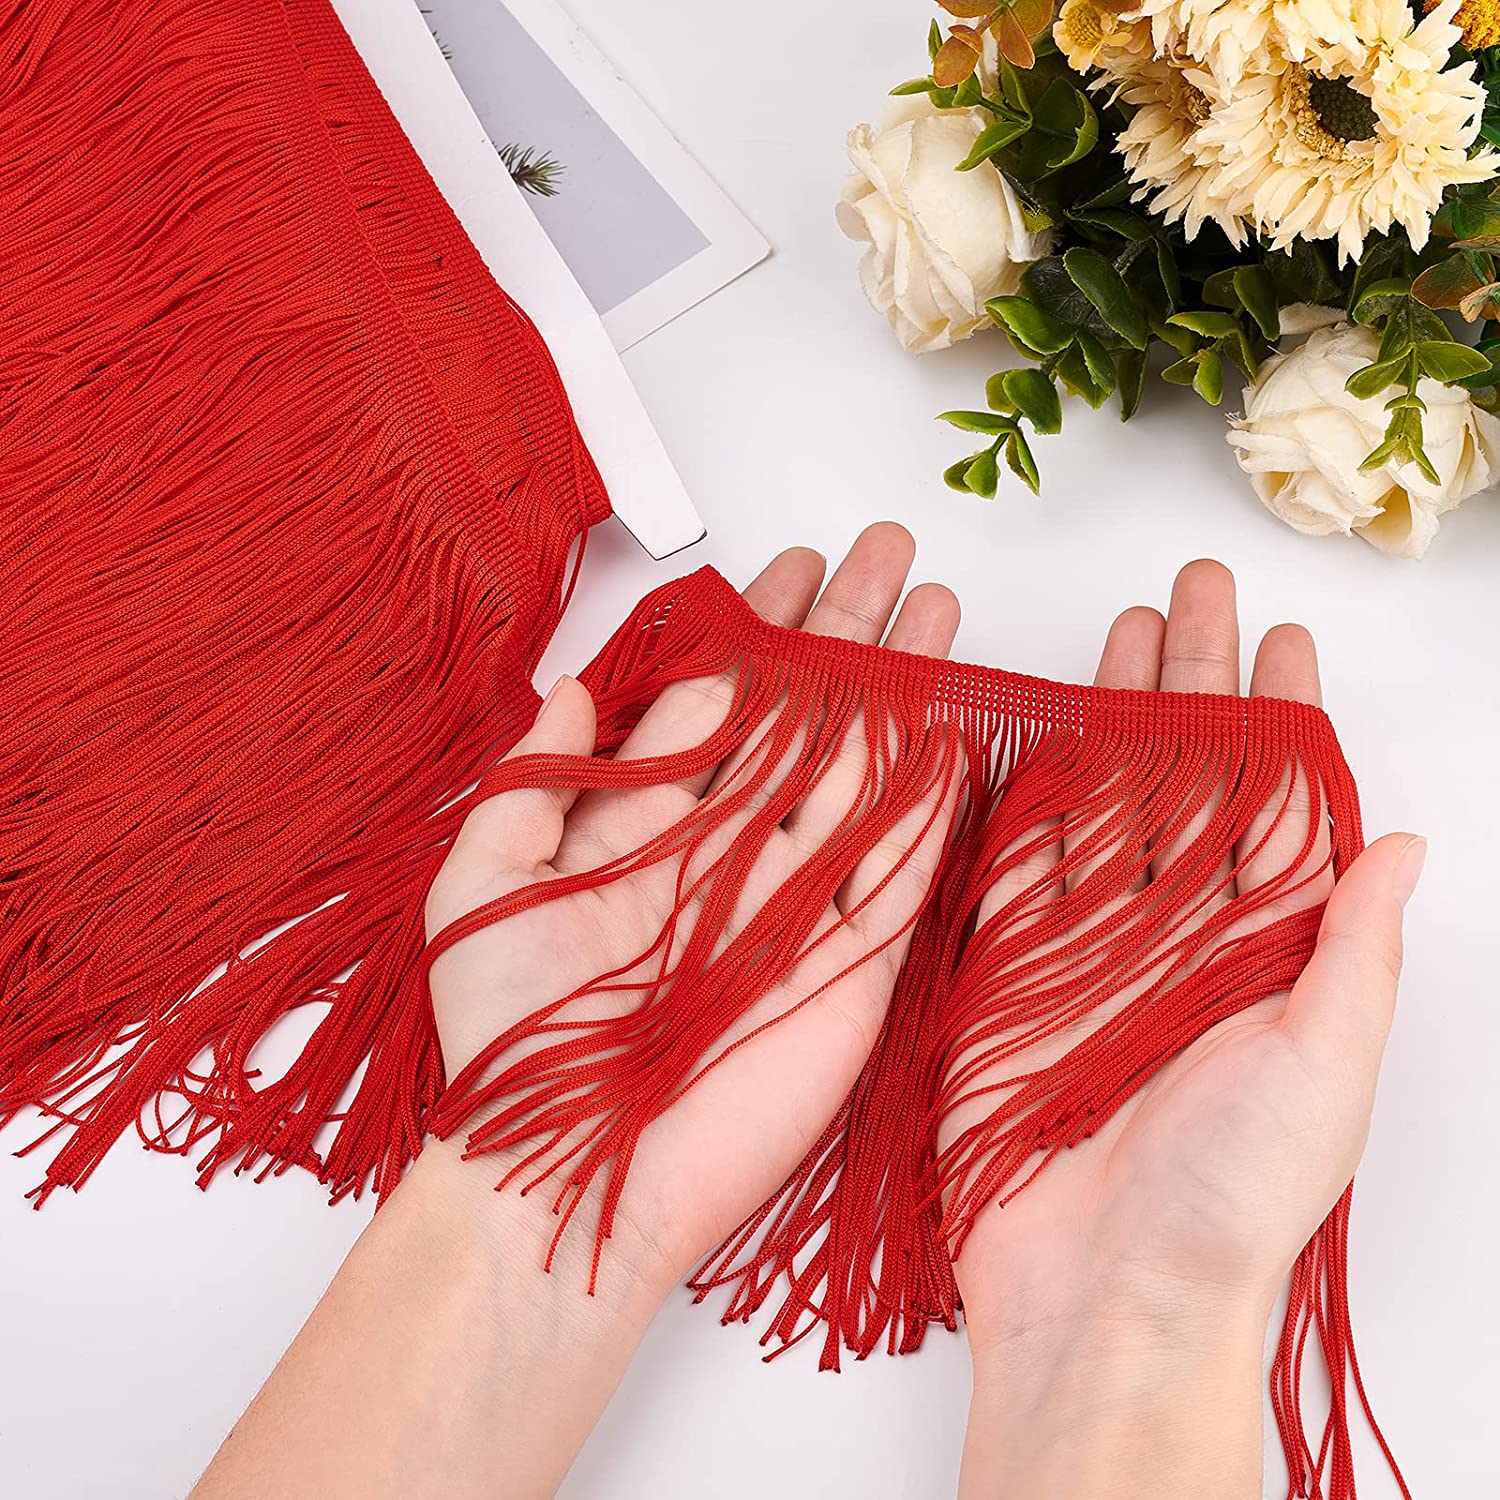 10m Red Sewing Fringe Trim Polyester Tassel Fringe Tassel Clothes Accessories for DIY Latin Dress 155mm Wide